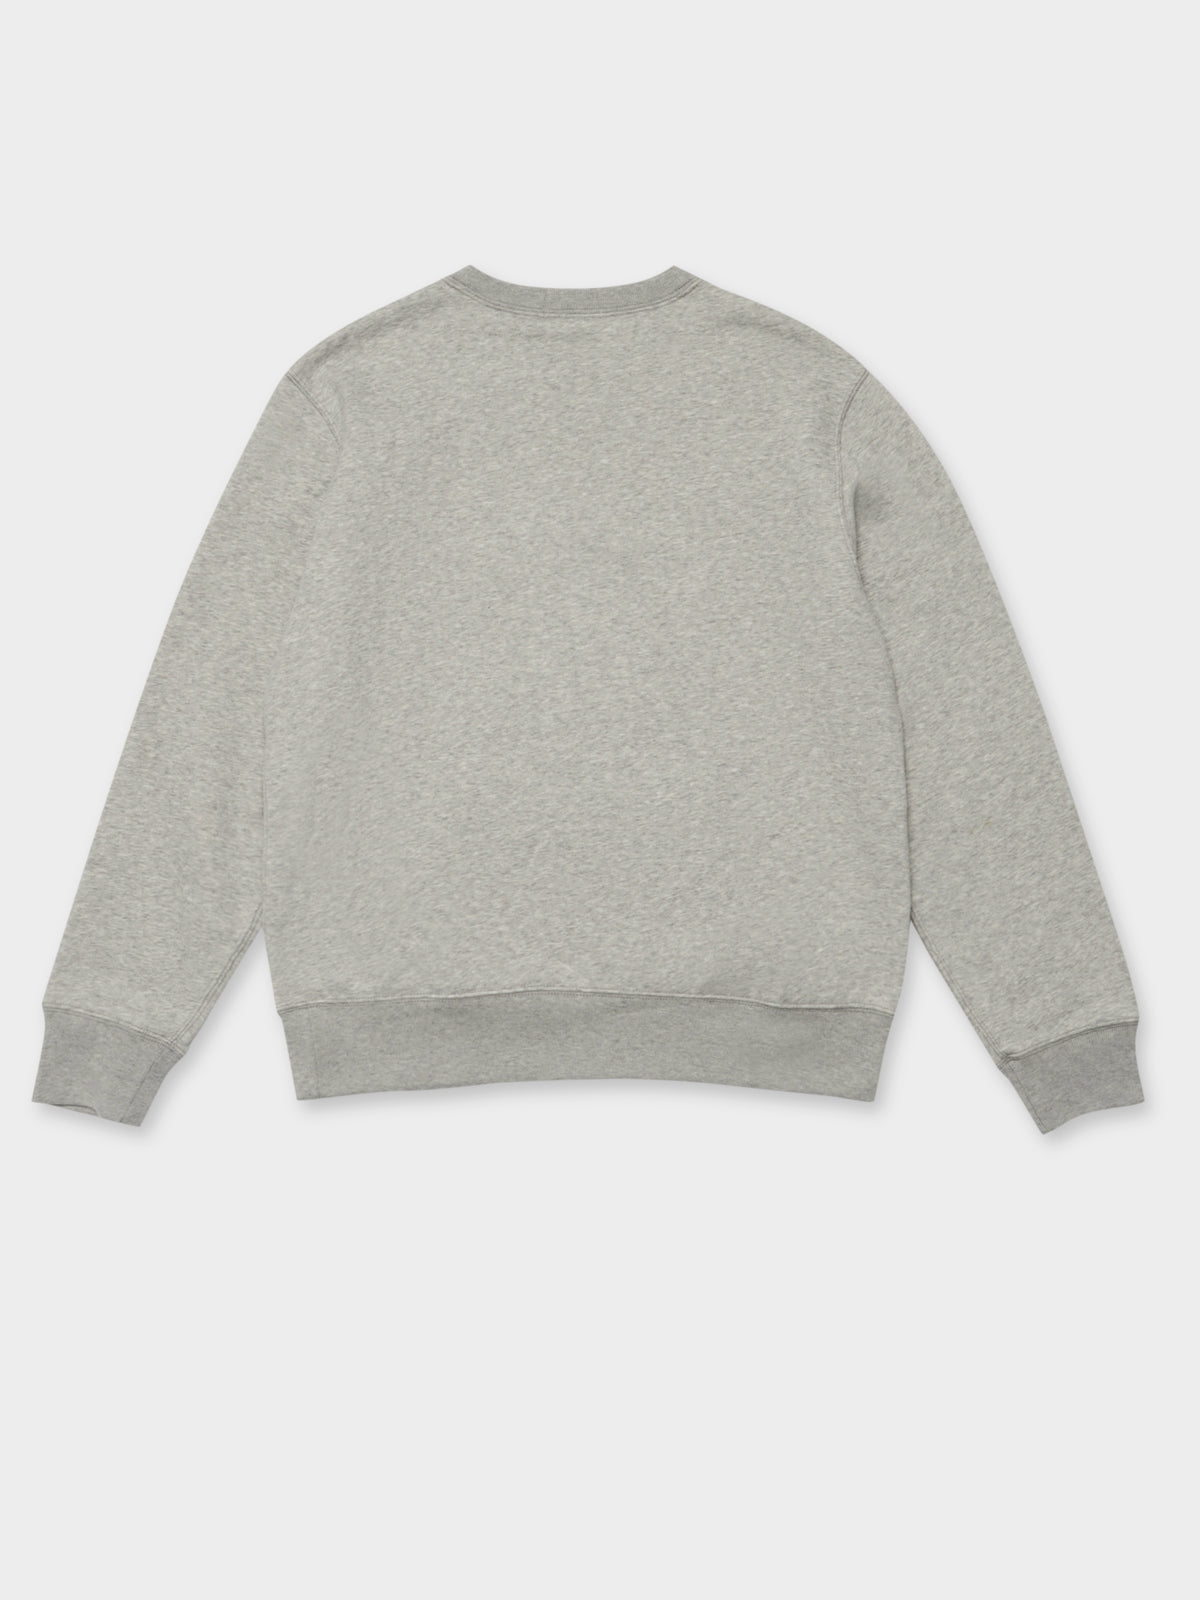 Preppy Bear Crew Sweater in Grey